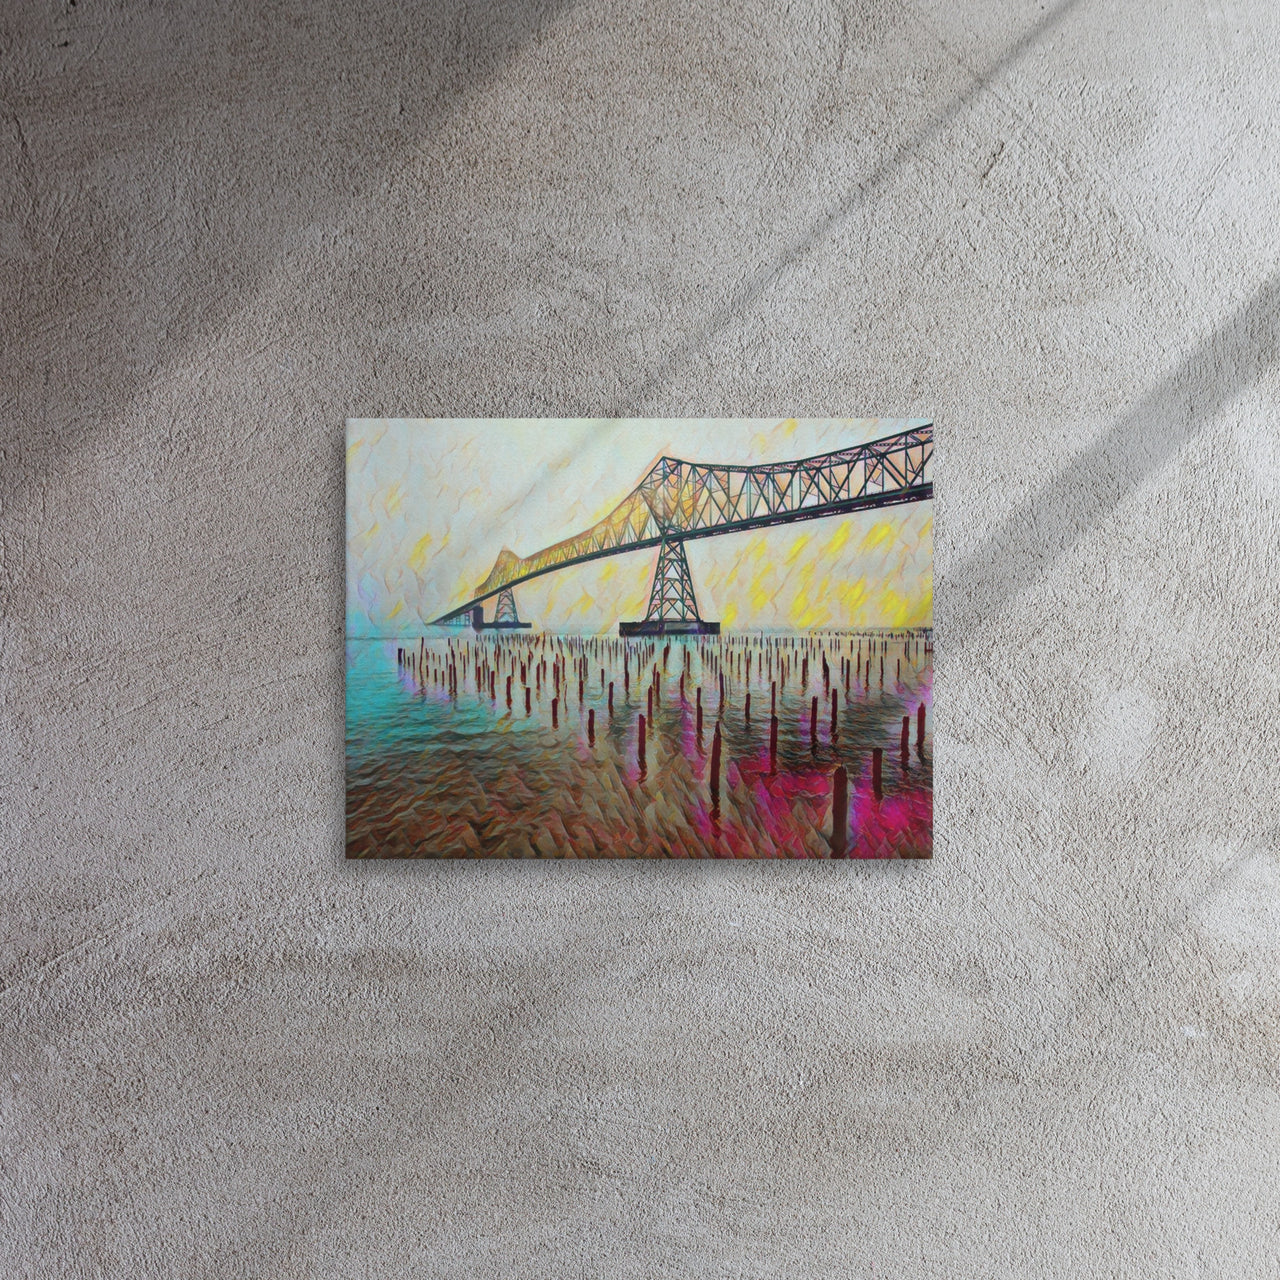 Astoria Bridge - Digital Art - Thin canvas